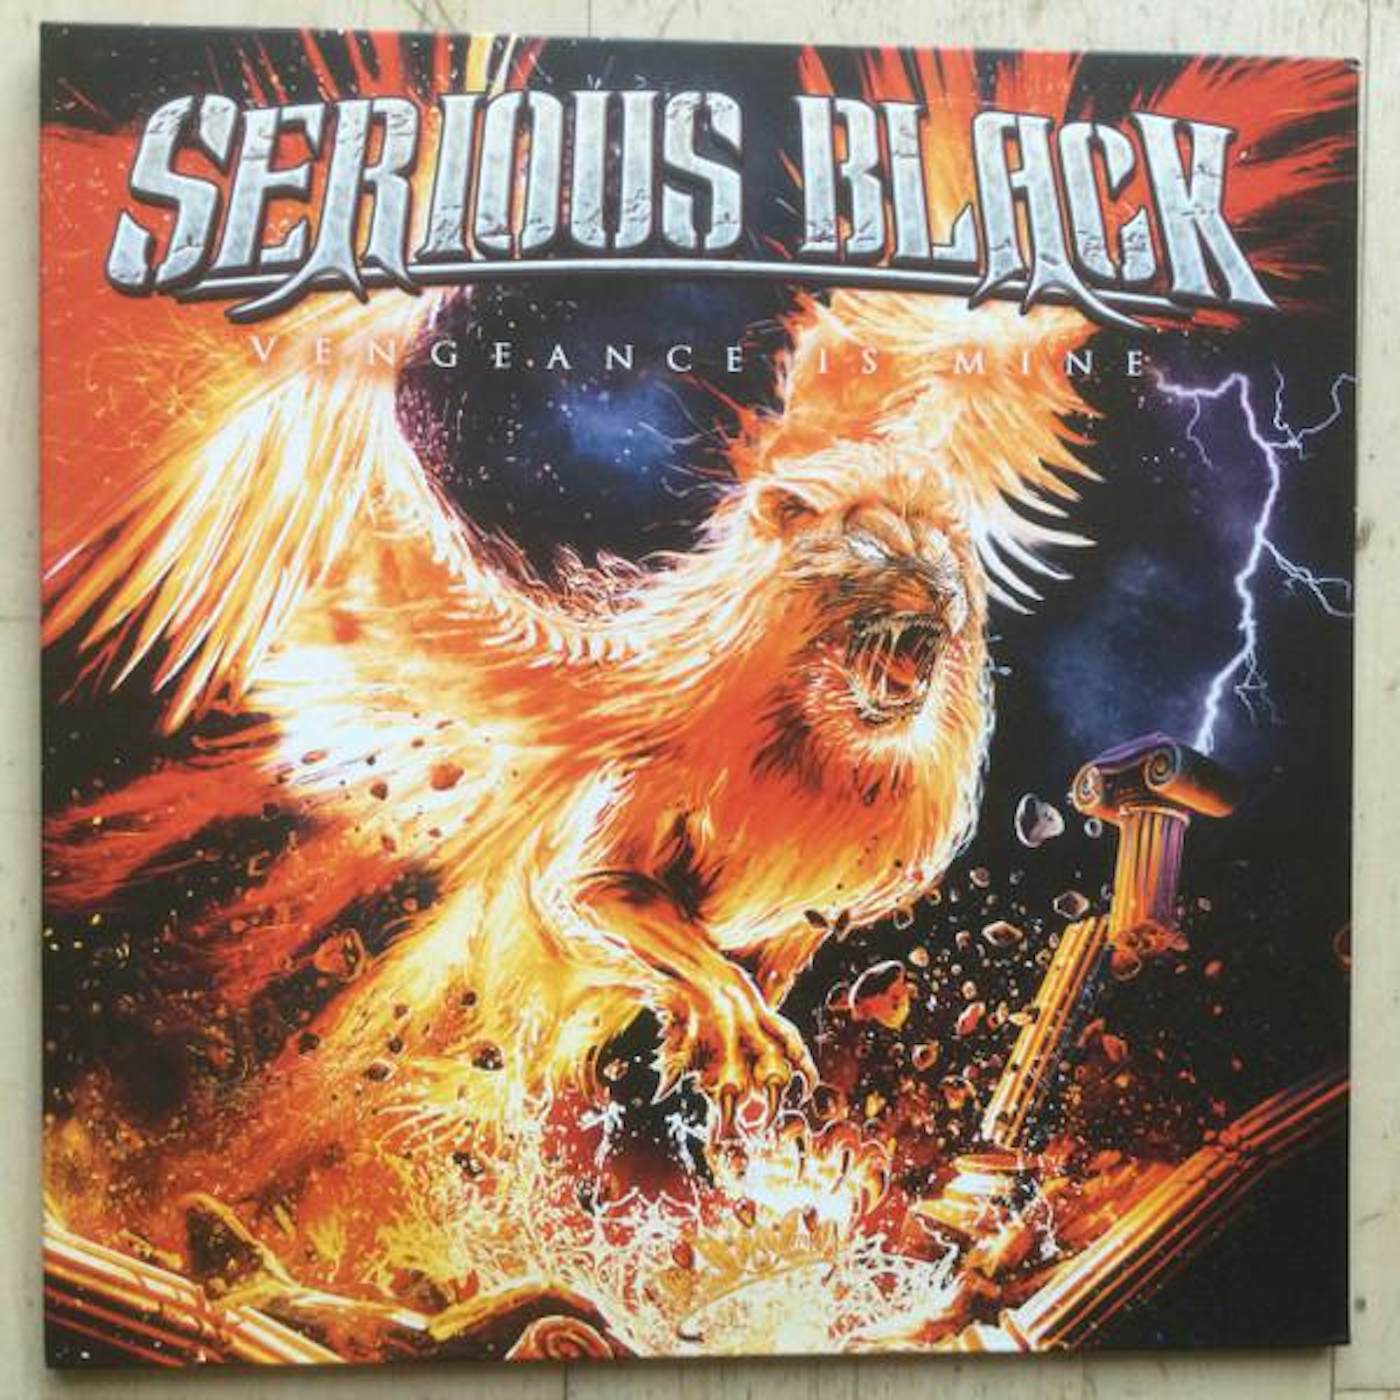 Serious Black Vengeance Is Mine Vinyl Record